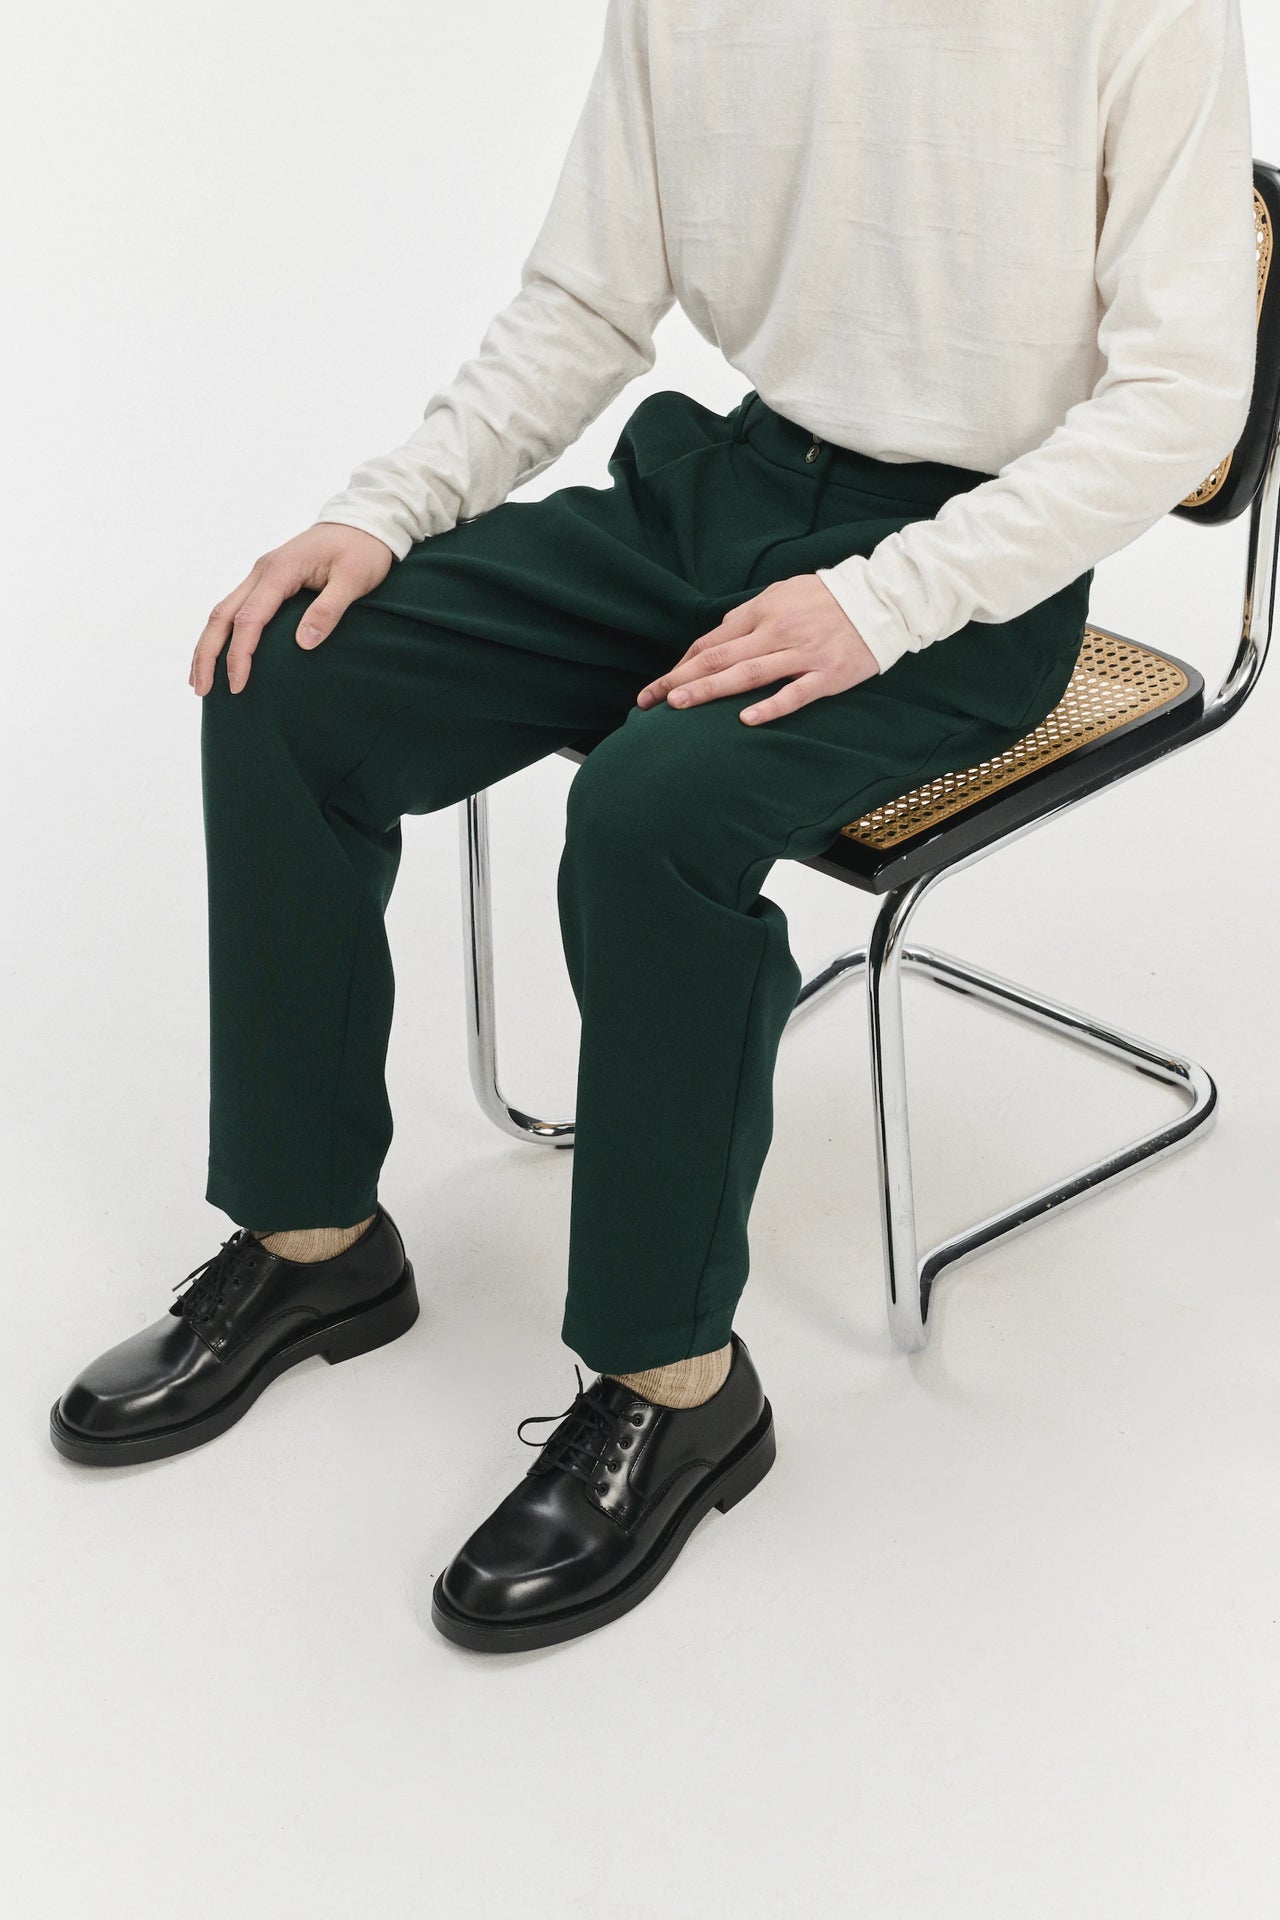 Genuine Trousers in the Finest Dark Petrol Green Italian Double Virgin Wool by Giuseppe Botto